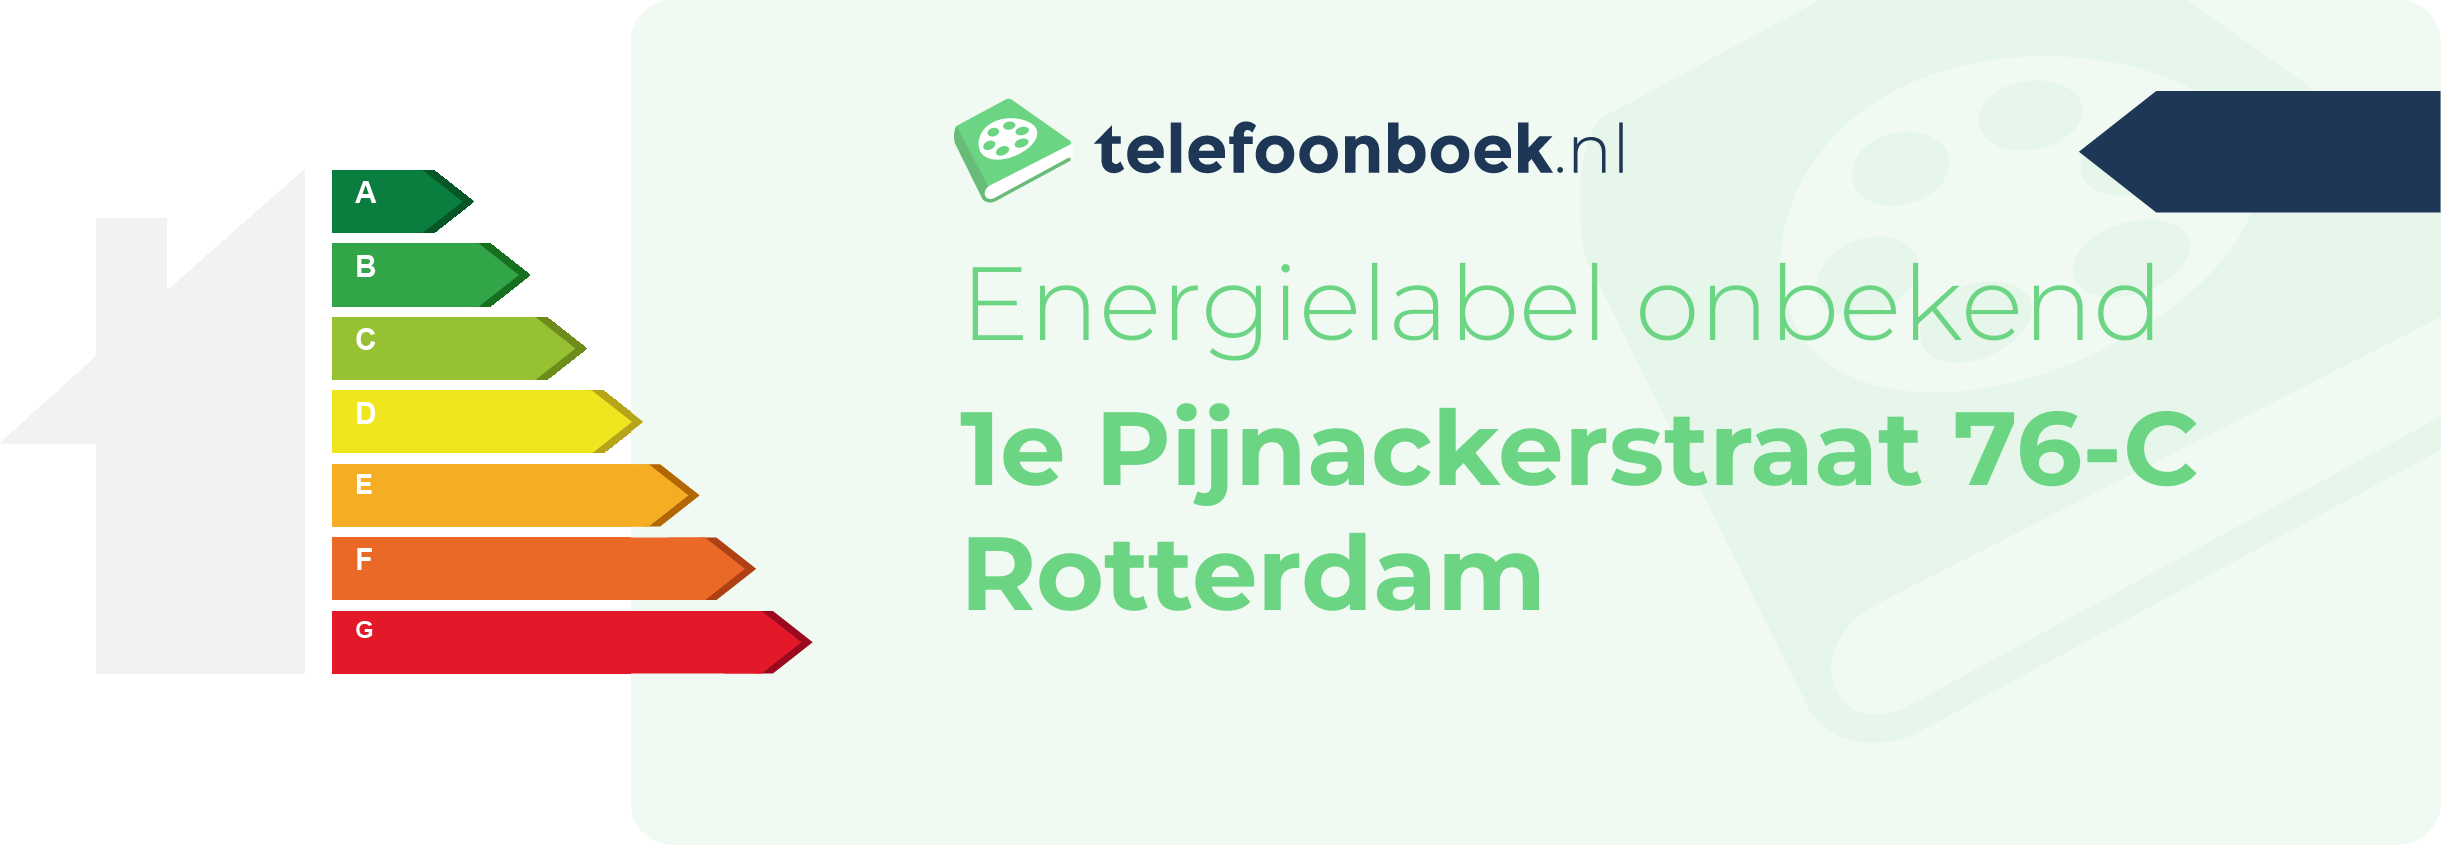 Energielabel 1e Pijnackerstraat 76-C Rotterdam